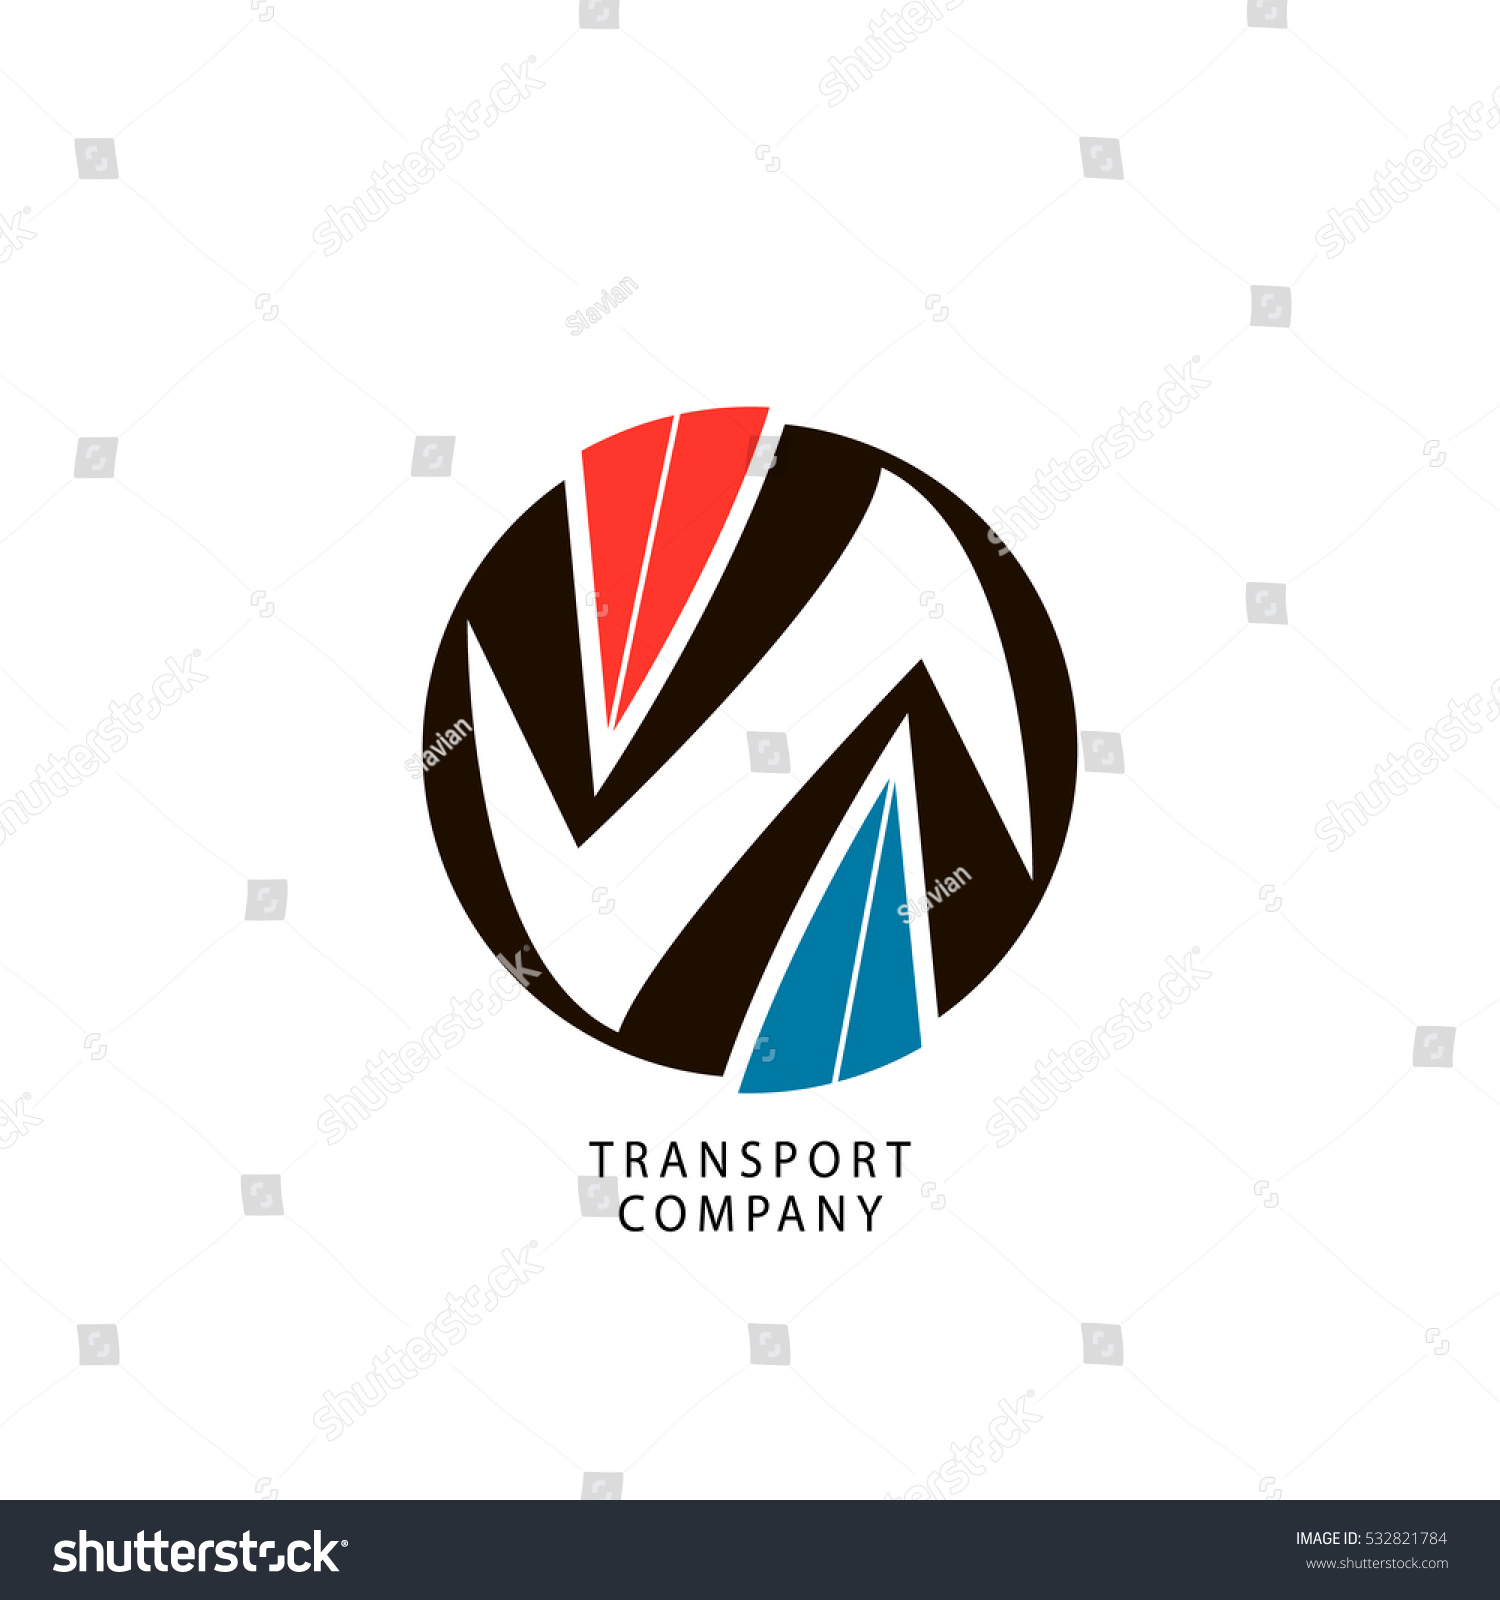 Logo Transport Company Stock Vector 532821784 - Shutterstock